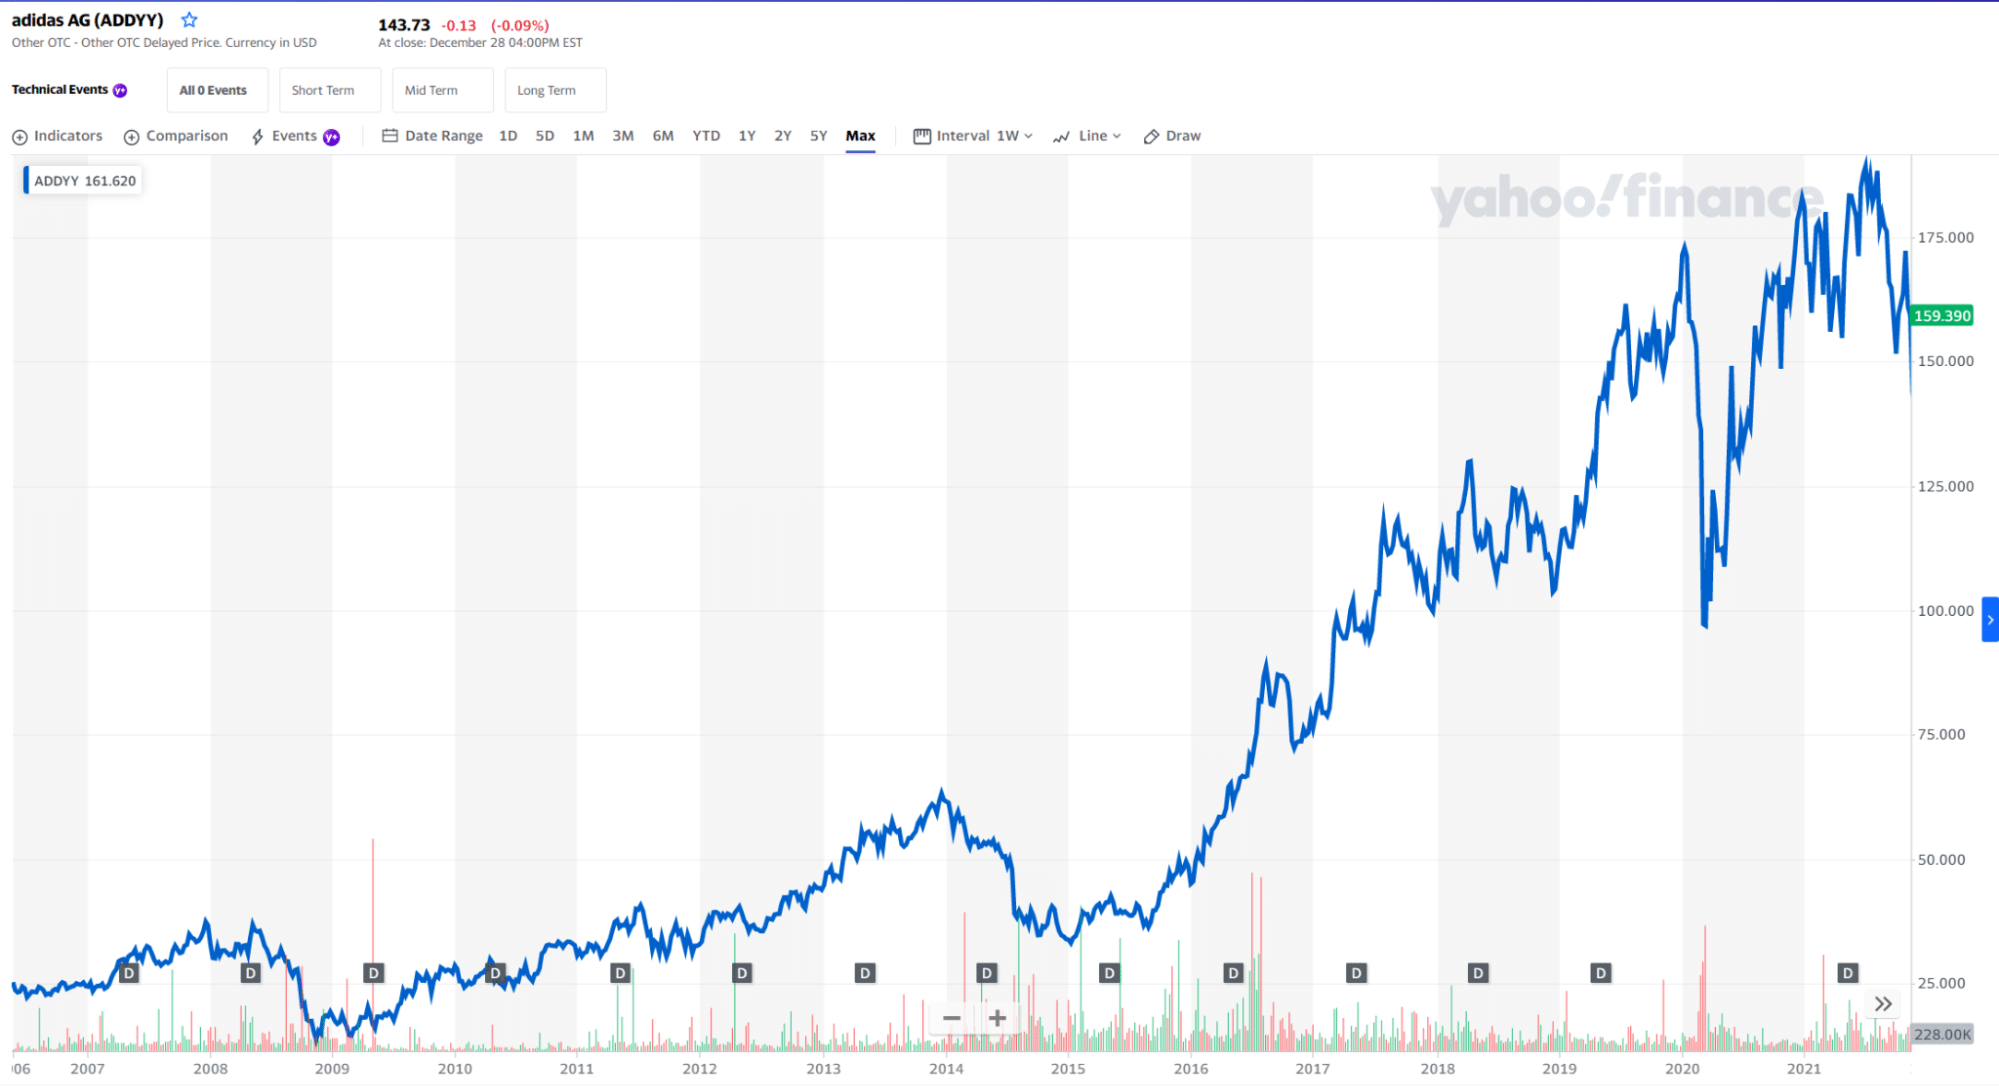 ADDYY stock price chart 2007-2021